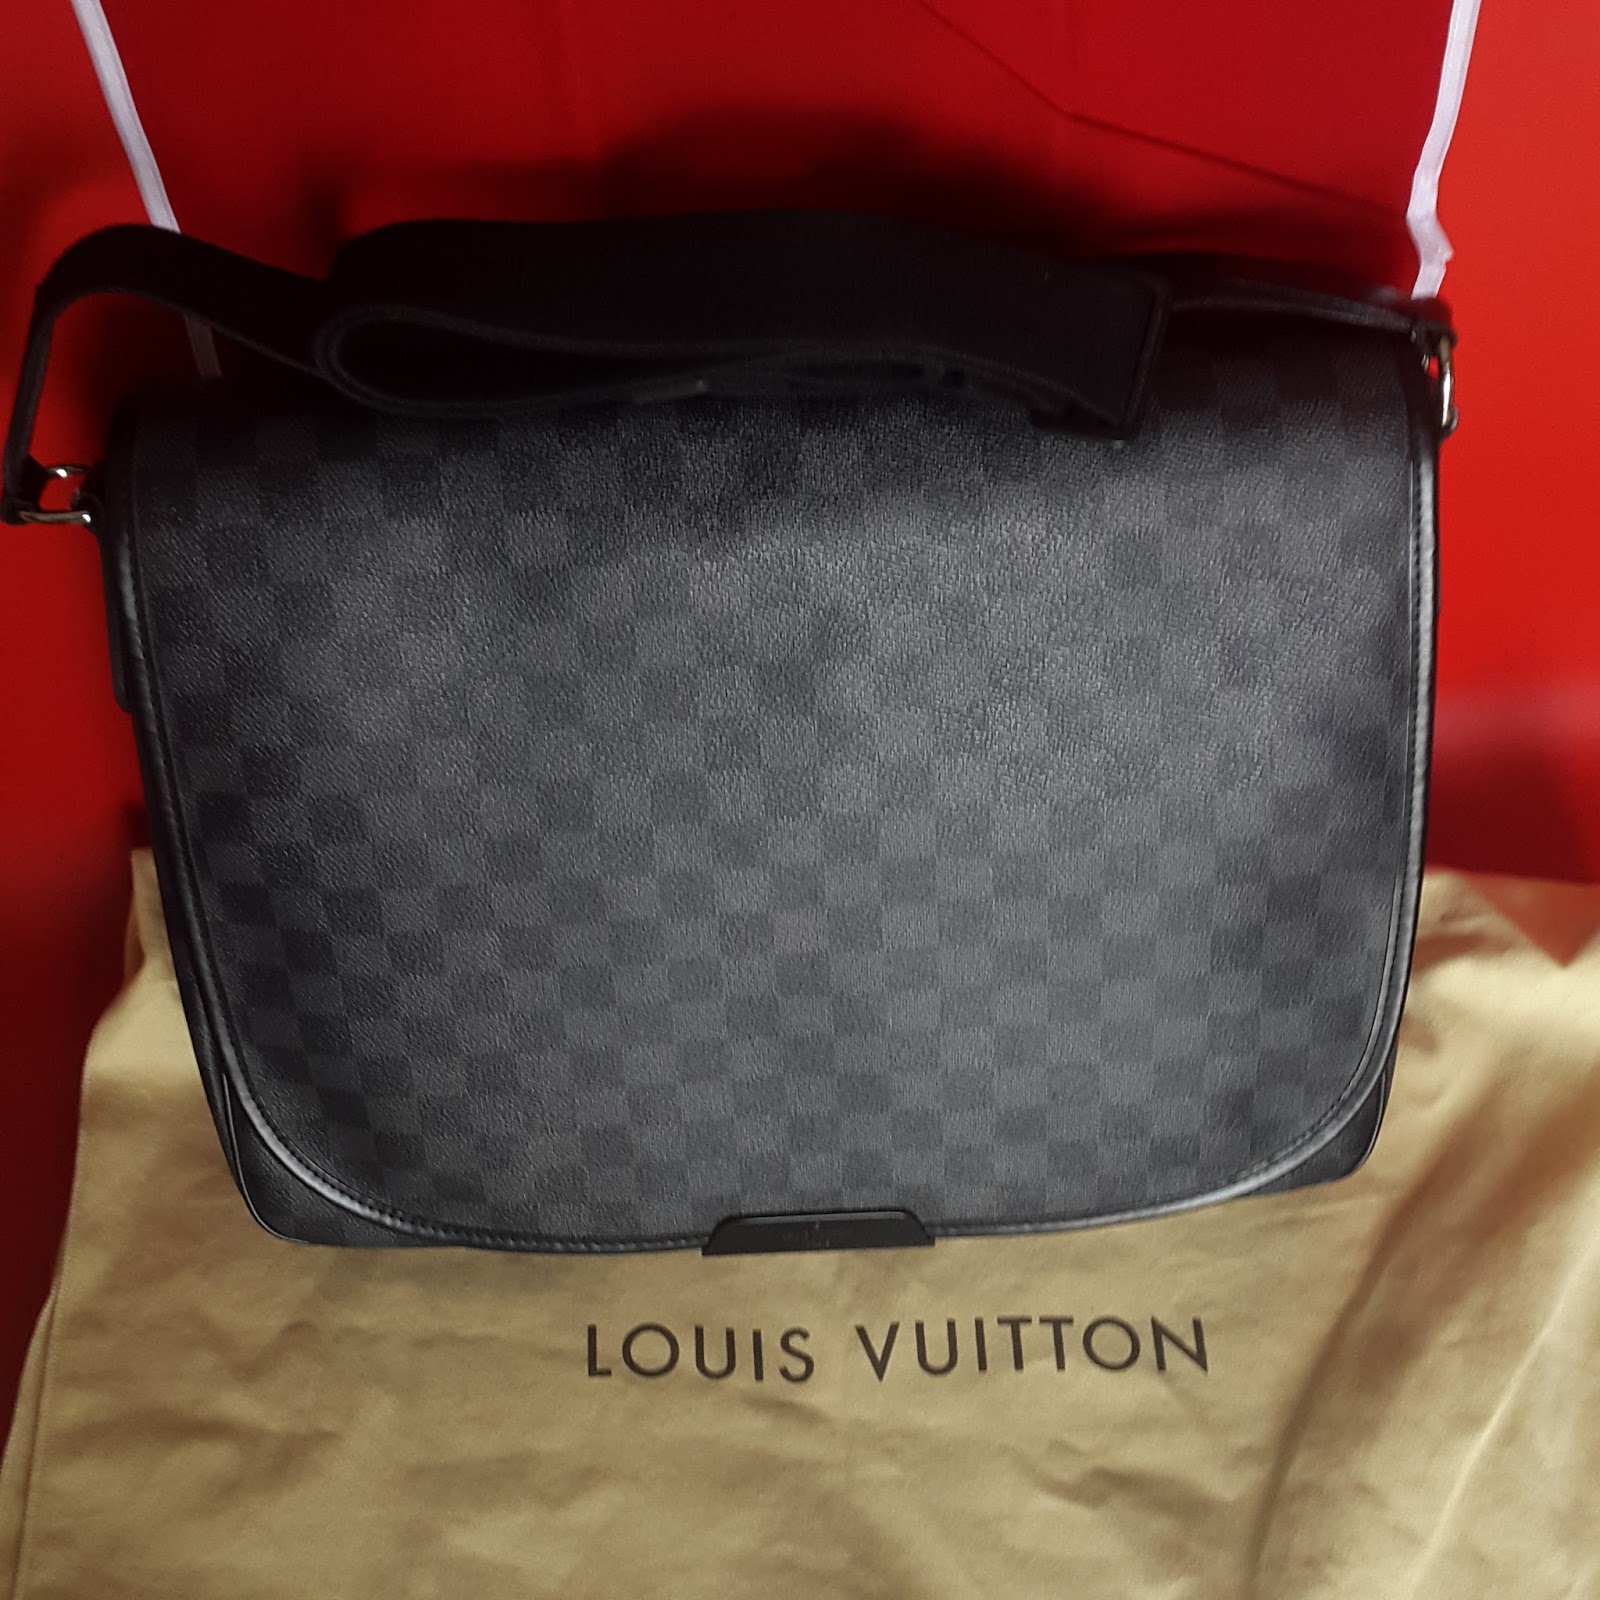 Jual Tas Louis Vuitton Neo Original Second Preloved Bekas